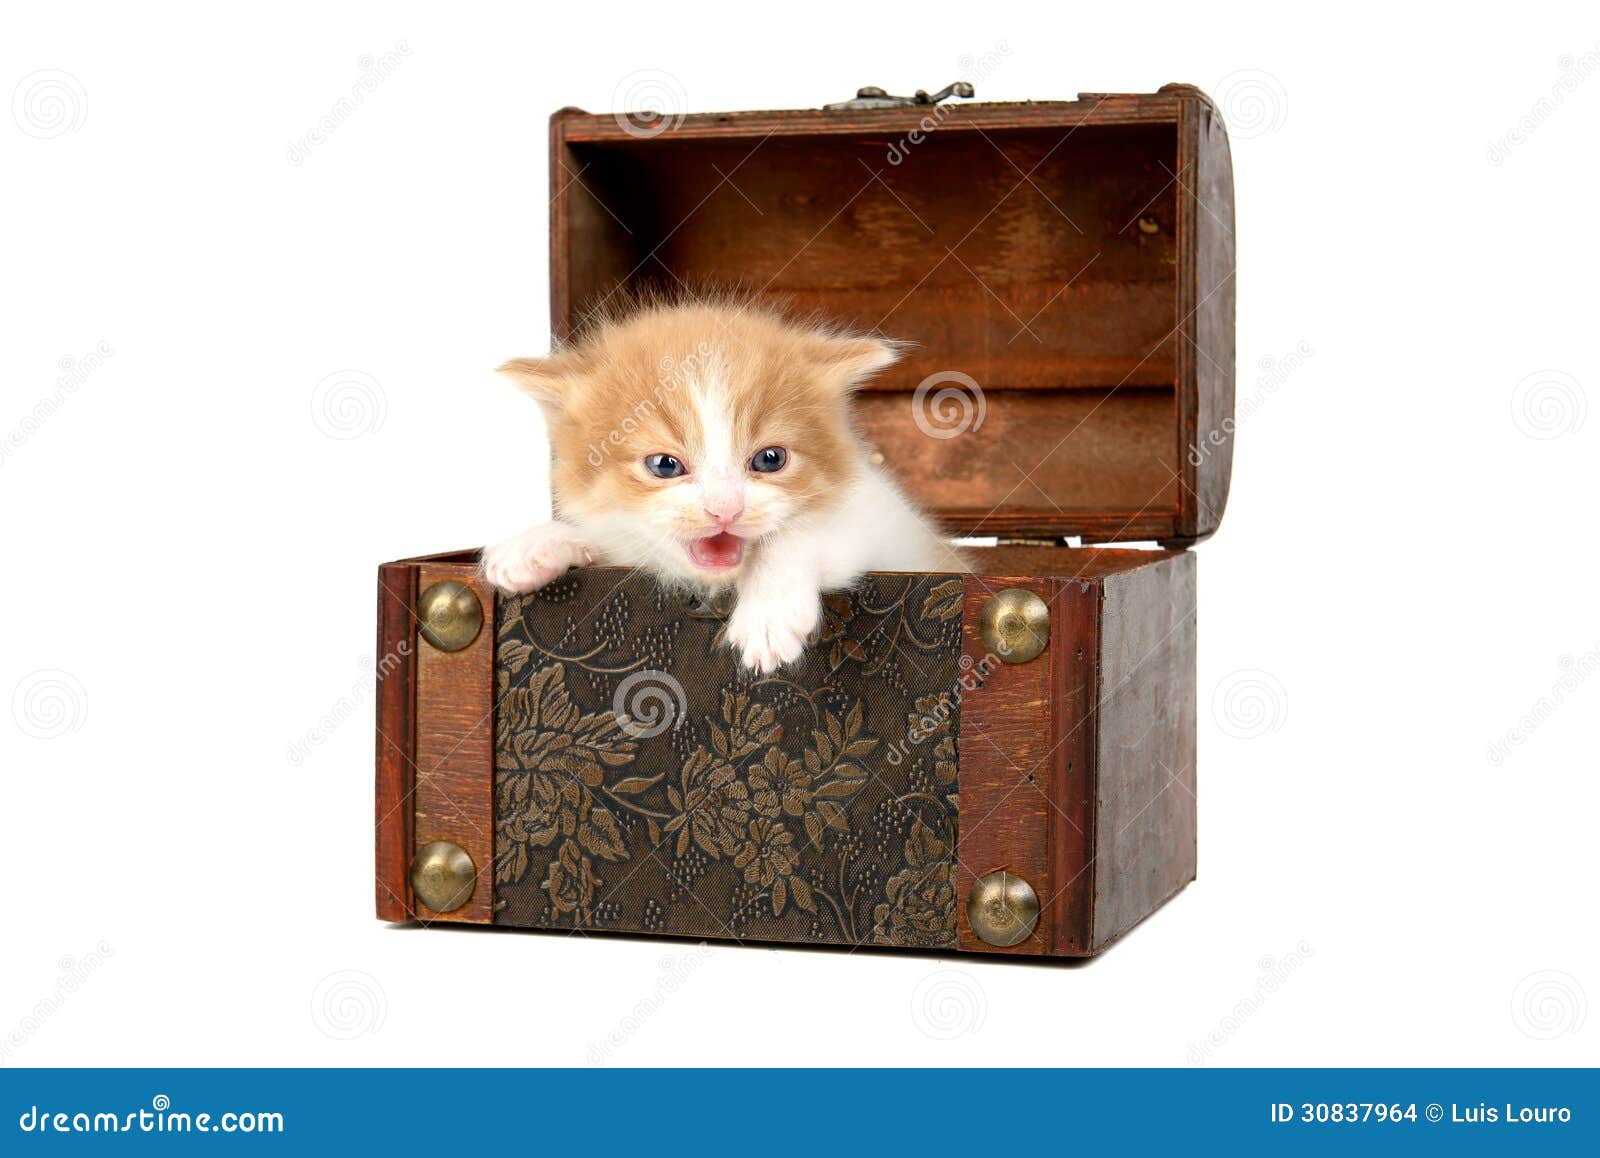 Kitten in a box. Baby kitten inside a wooden box isolated in white